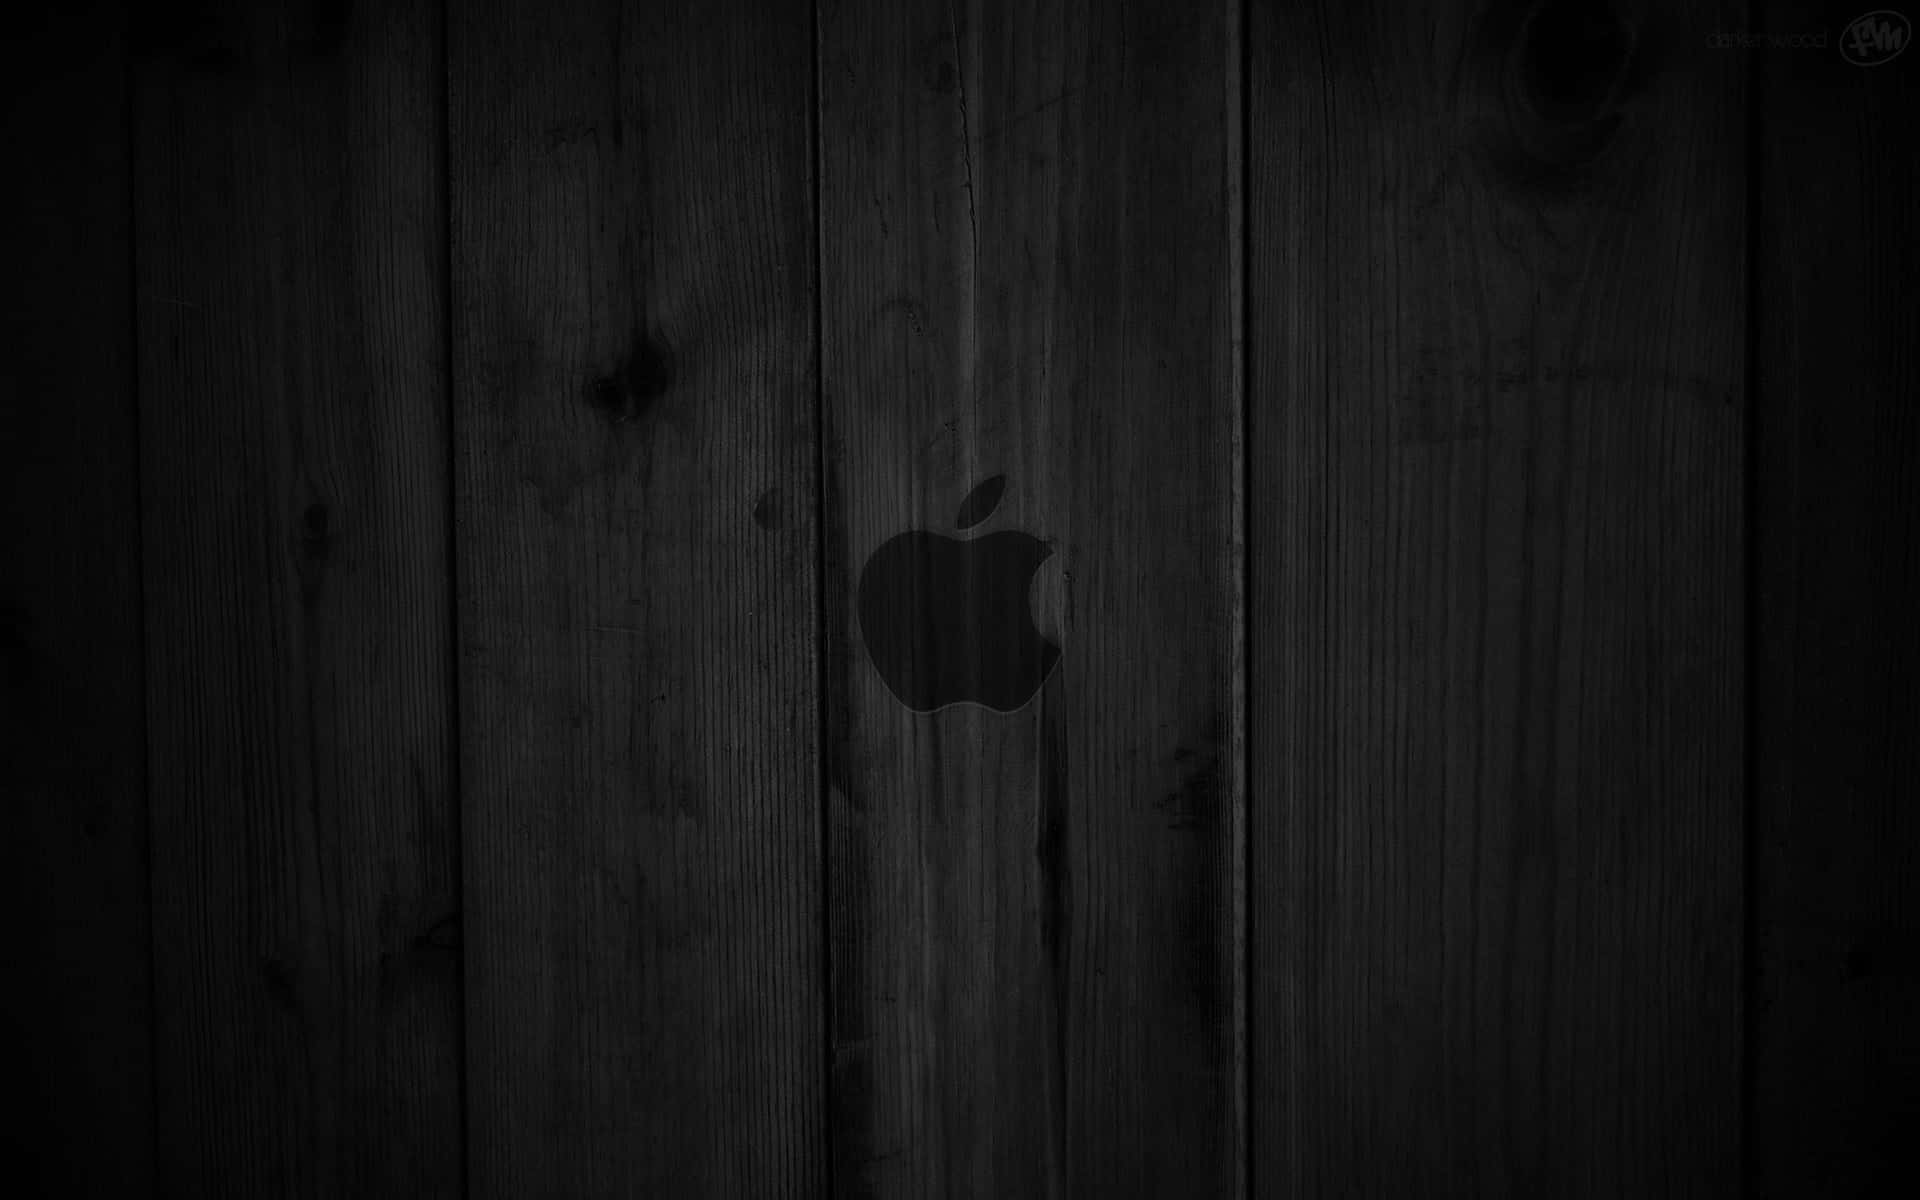 A Glossy 4k Apple on a Reflective Surface